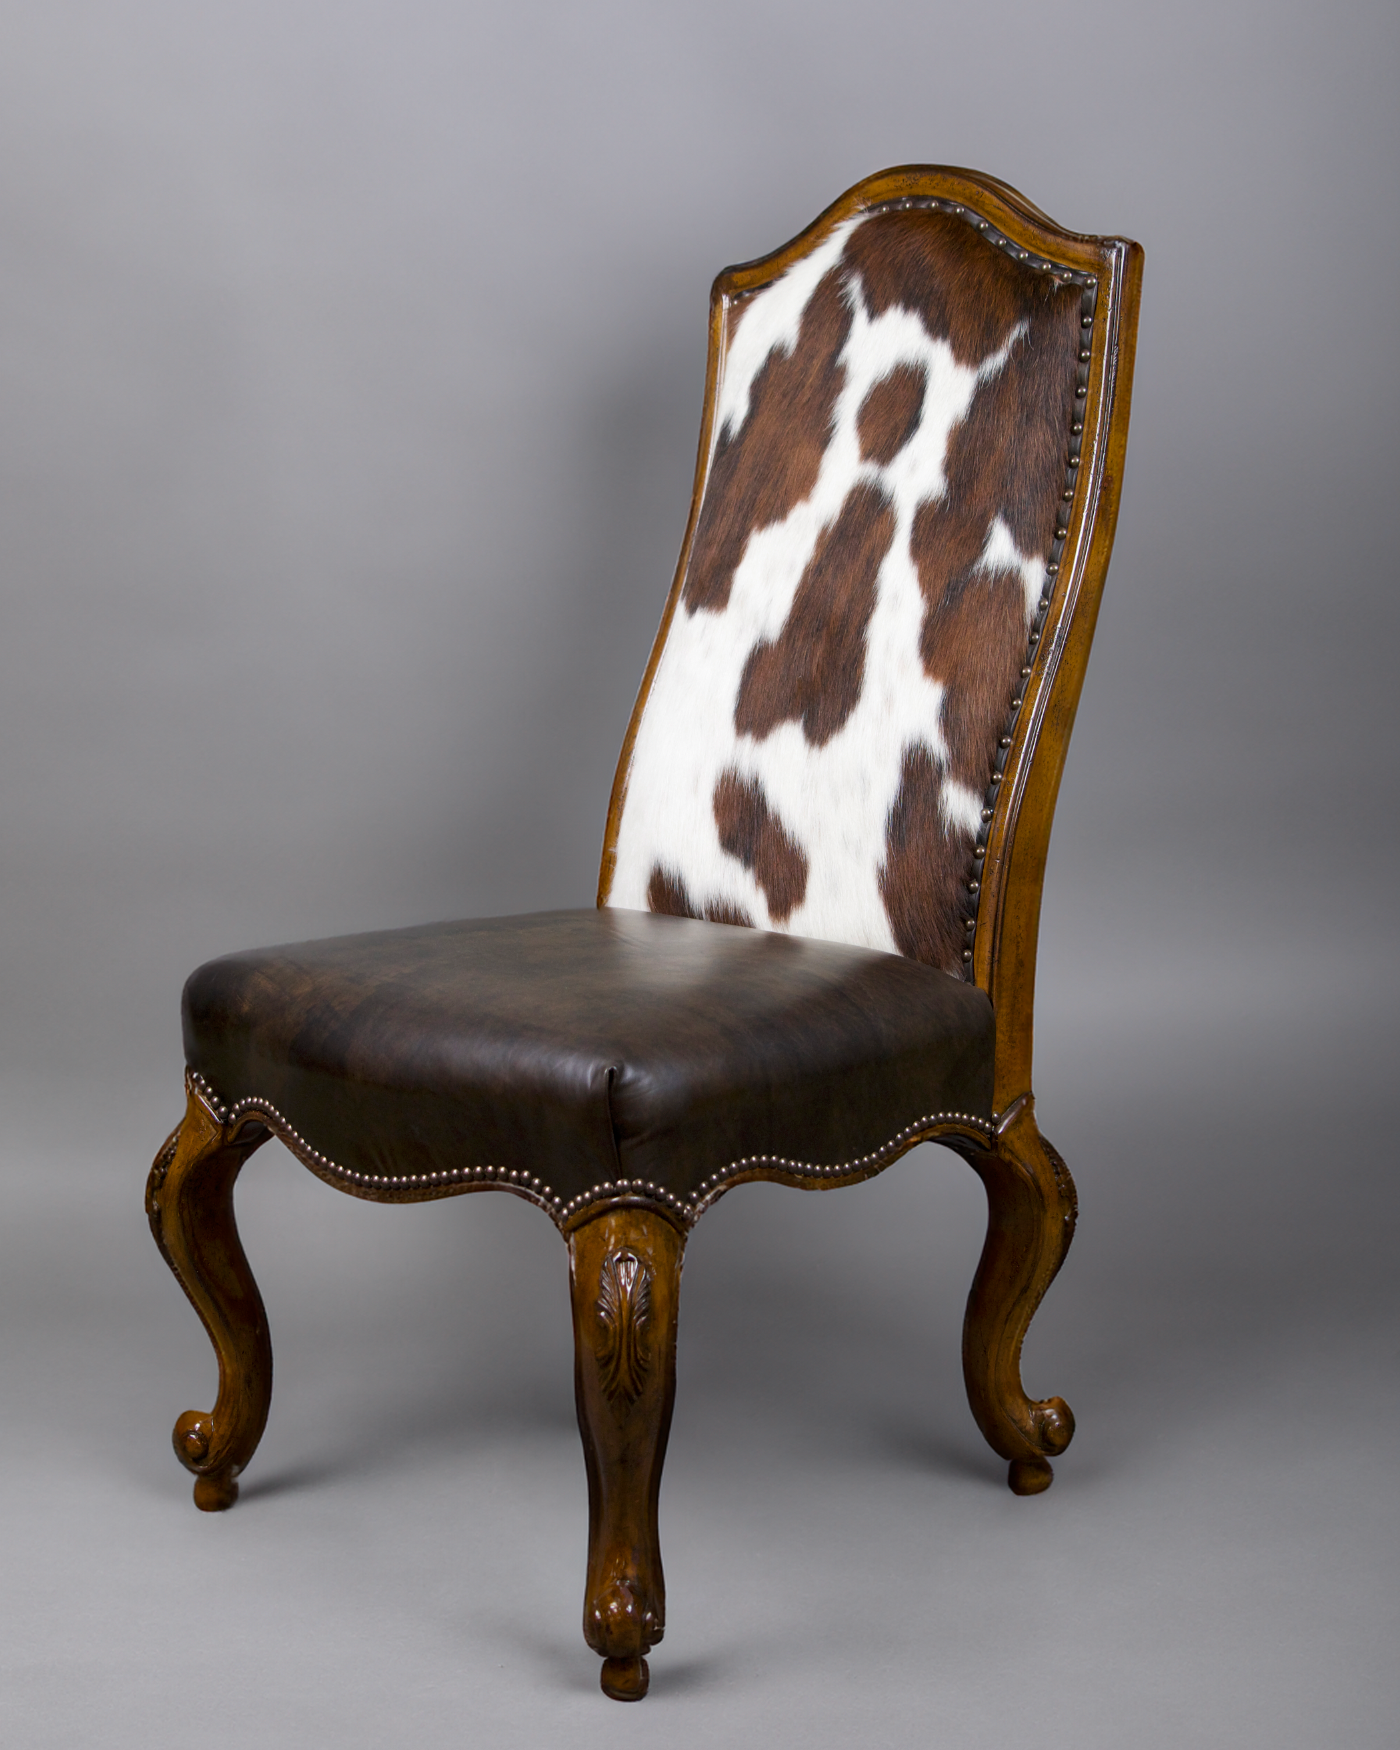 Ralph Lauren: Timeless Elegance Embodied - Cowhide Chair